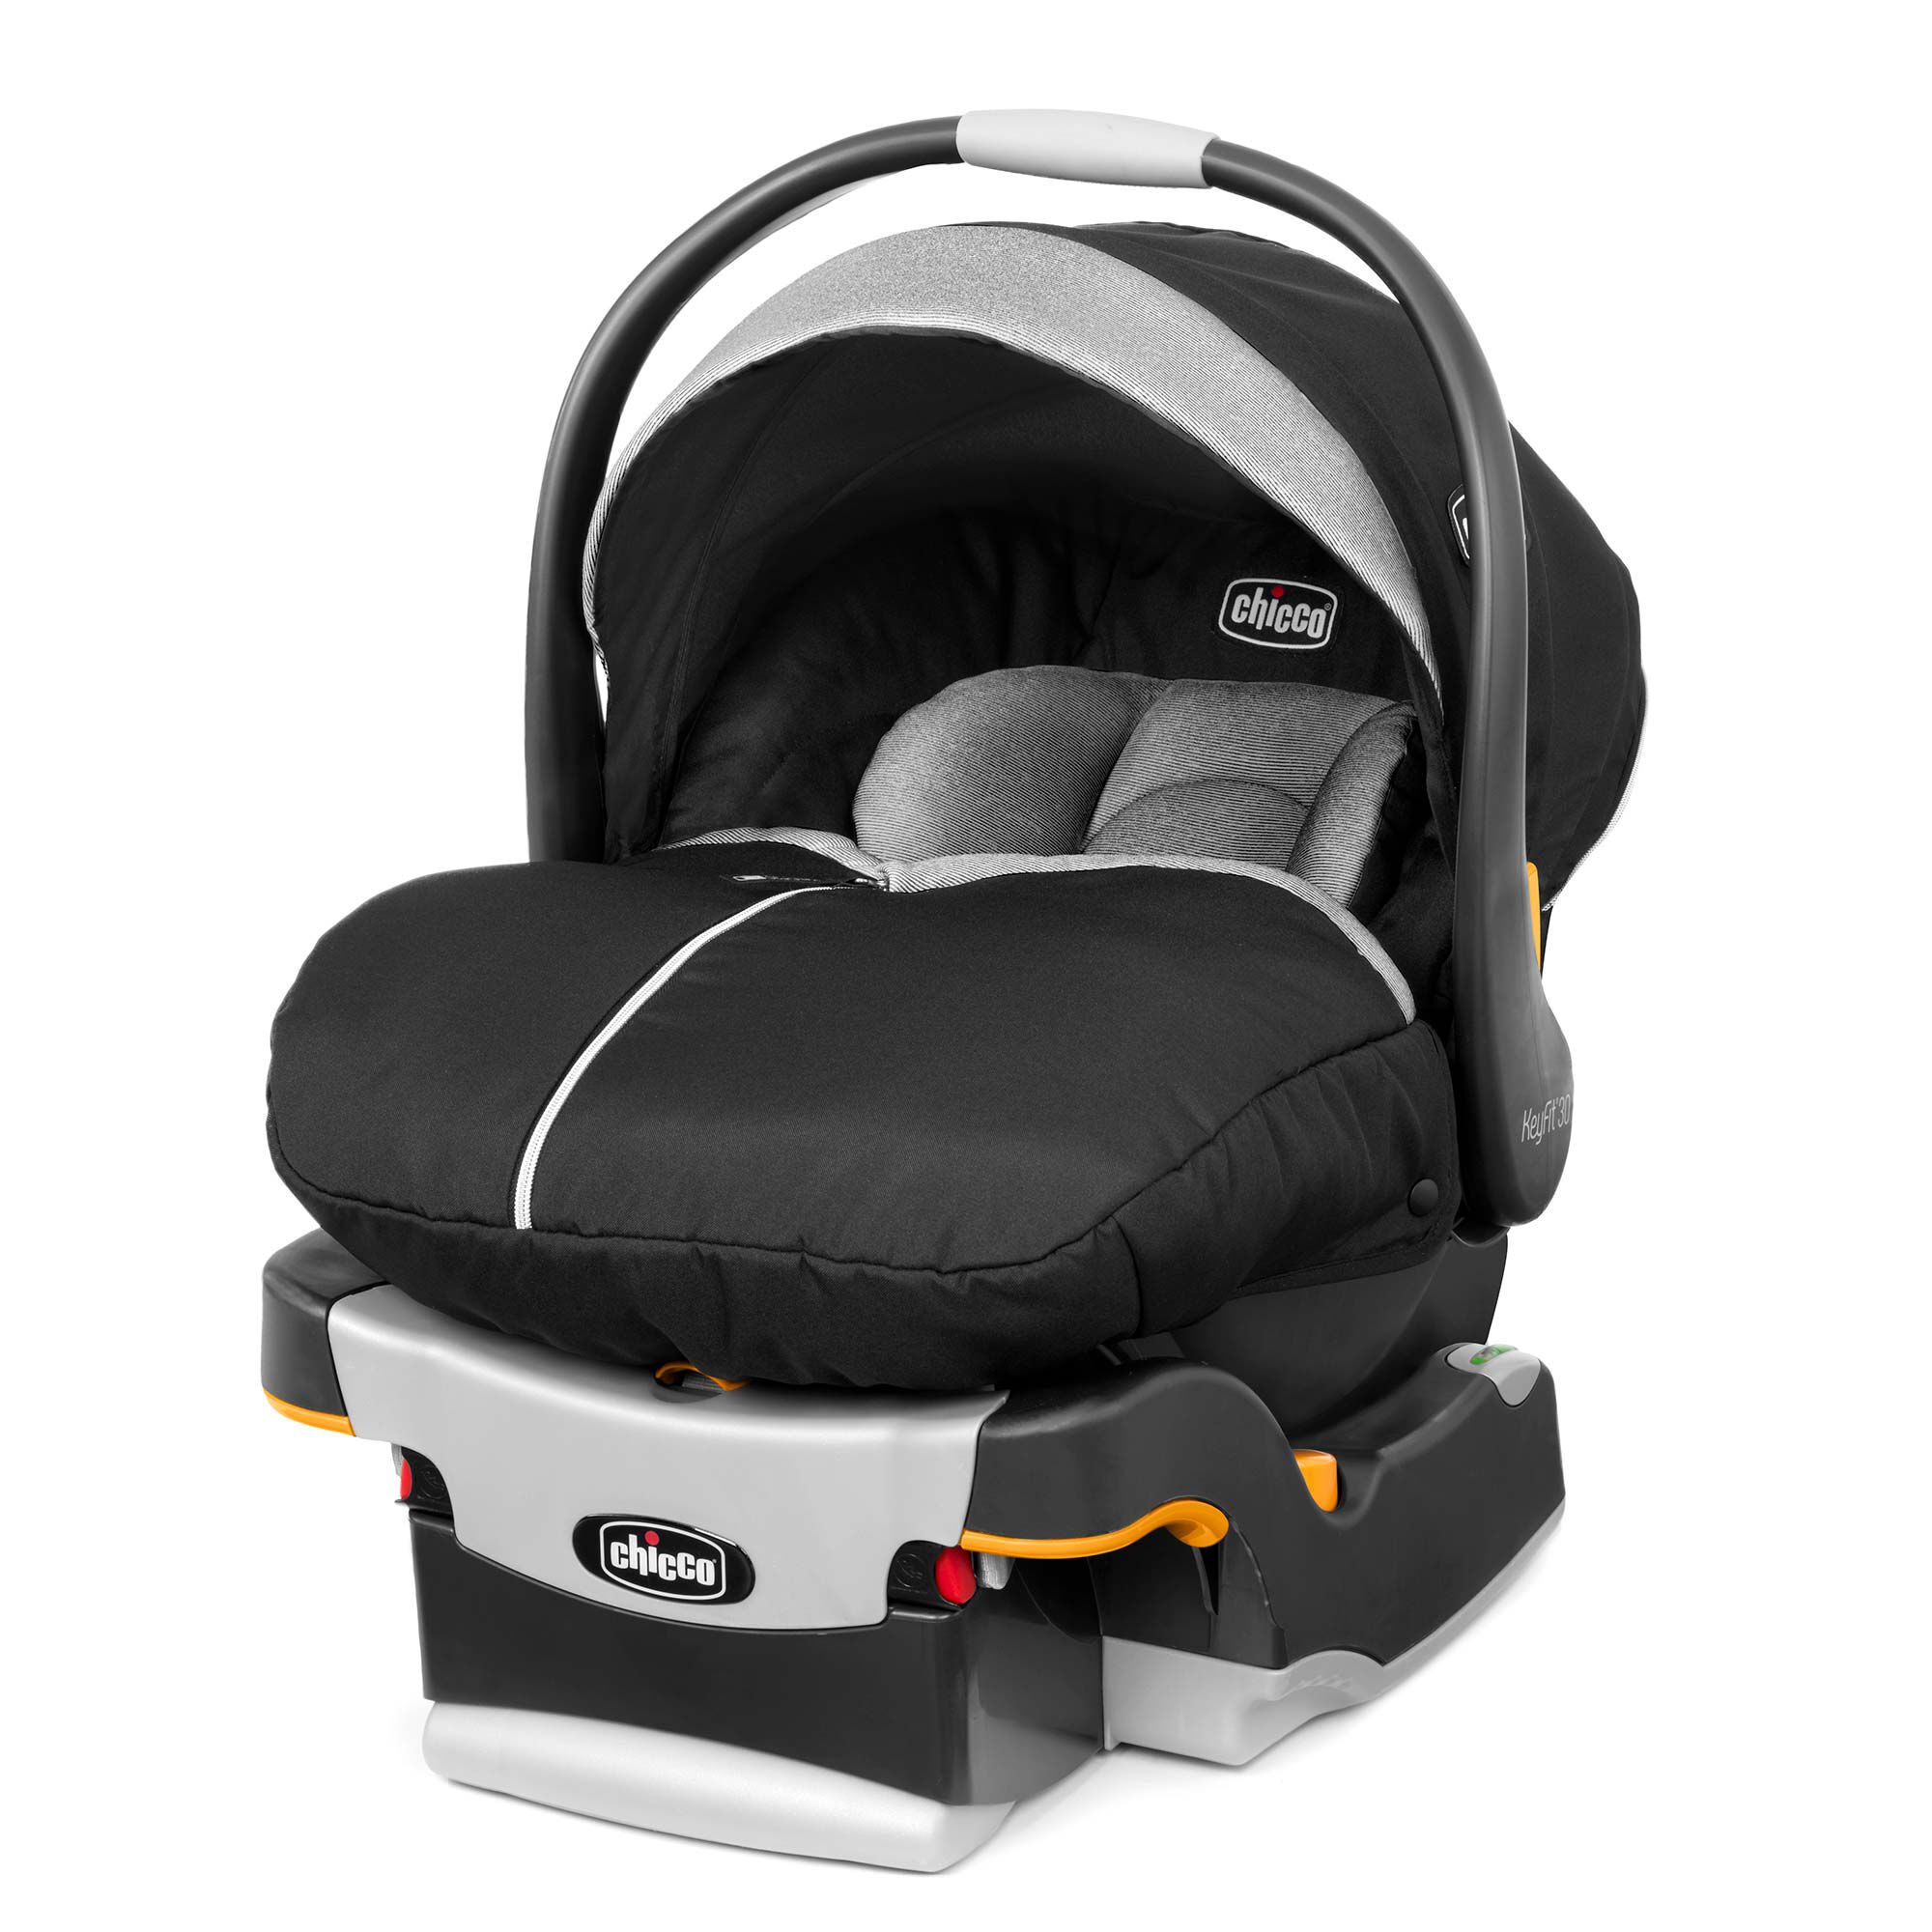 keyfit-30-zip-infant-car-seat-in-black-chicco